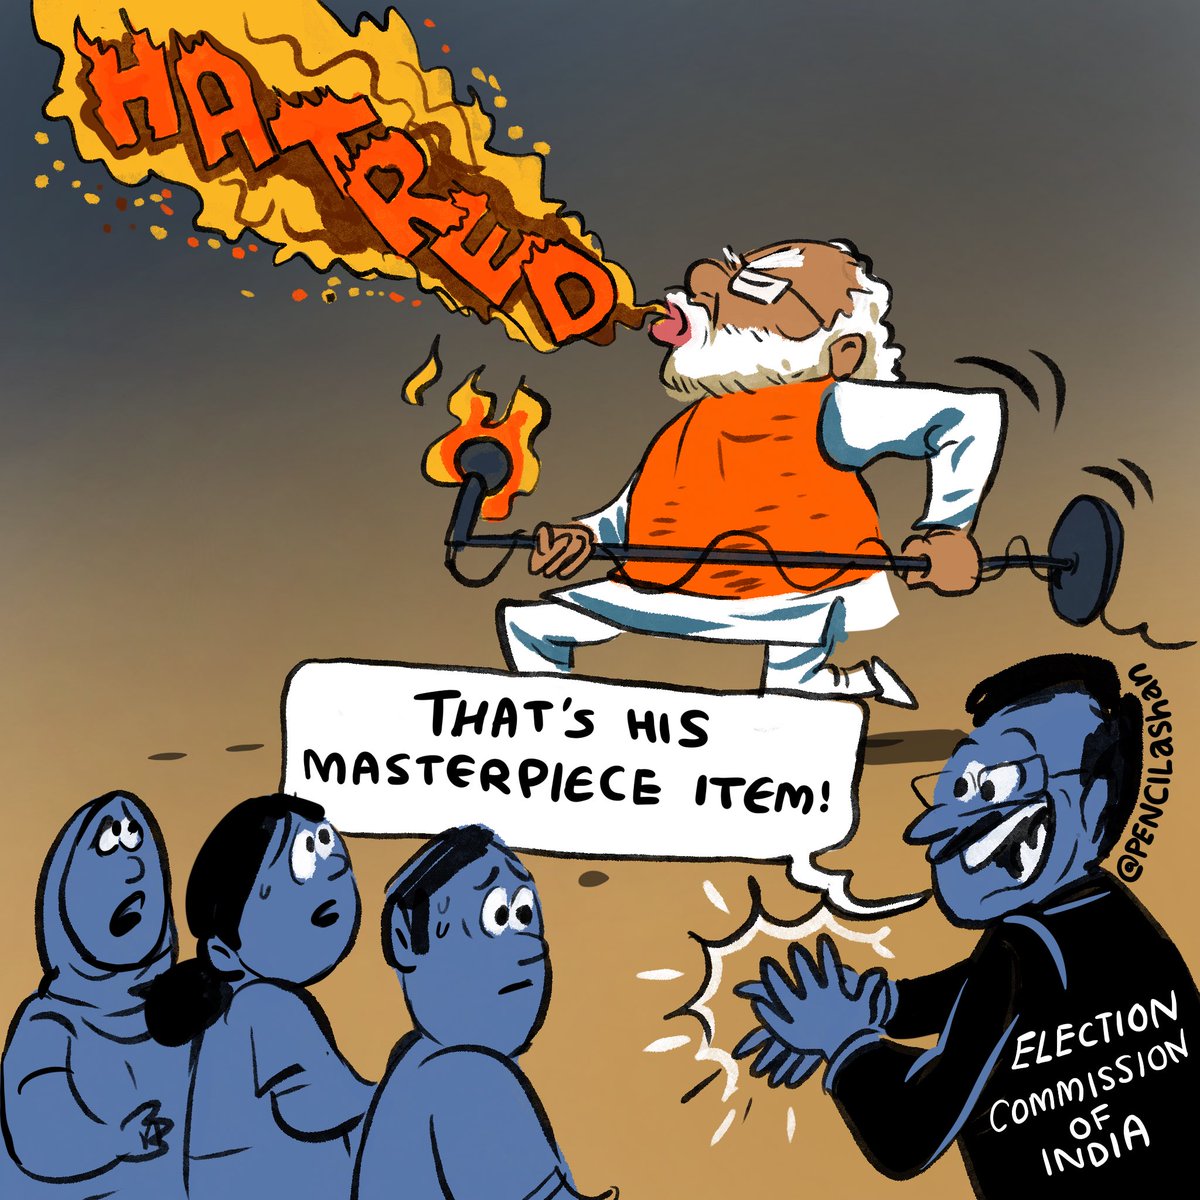 😏😏🥴 #stopspreadinghatred #worst_PM_India_has_everseen #democraticindia #saveindia #votewisely #saveindians #india #modi